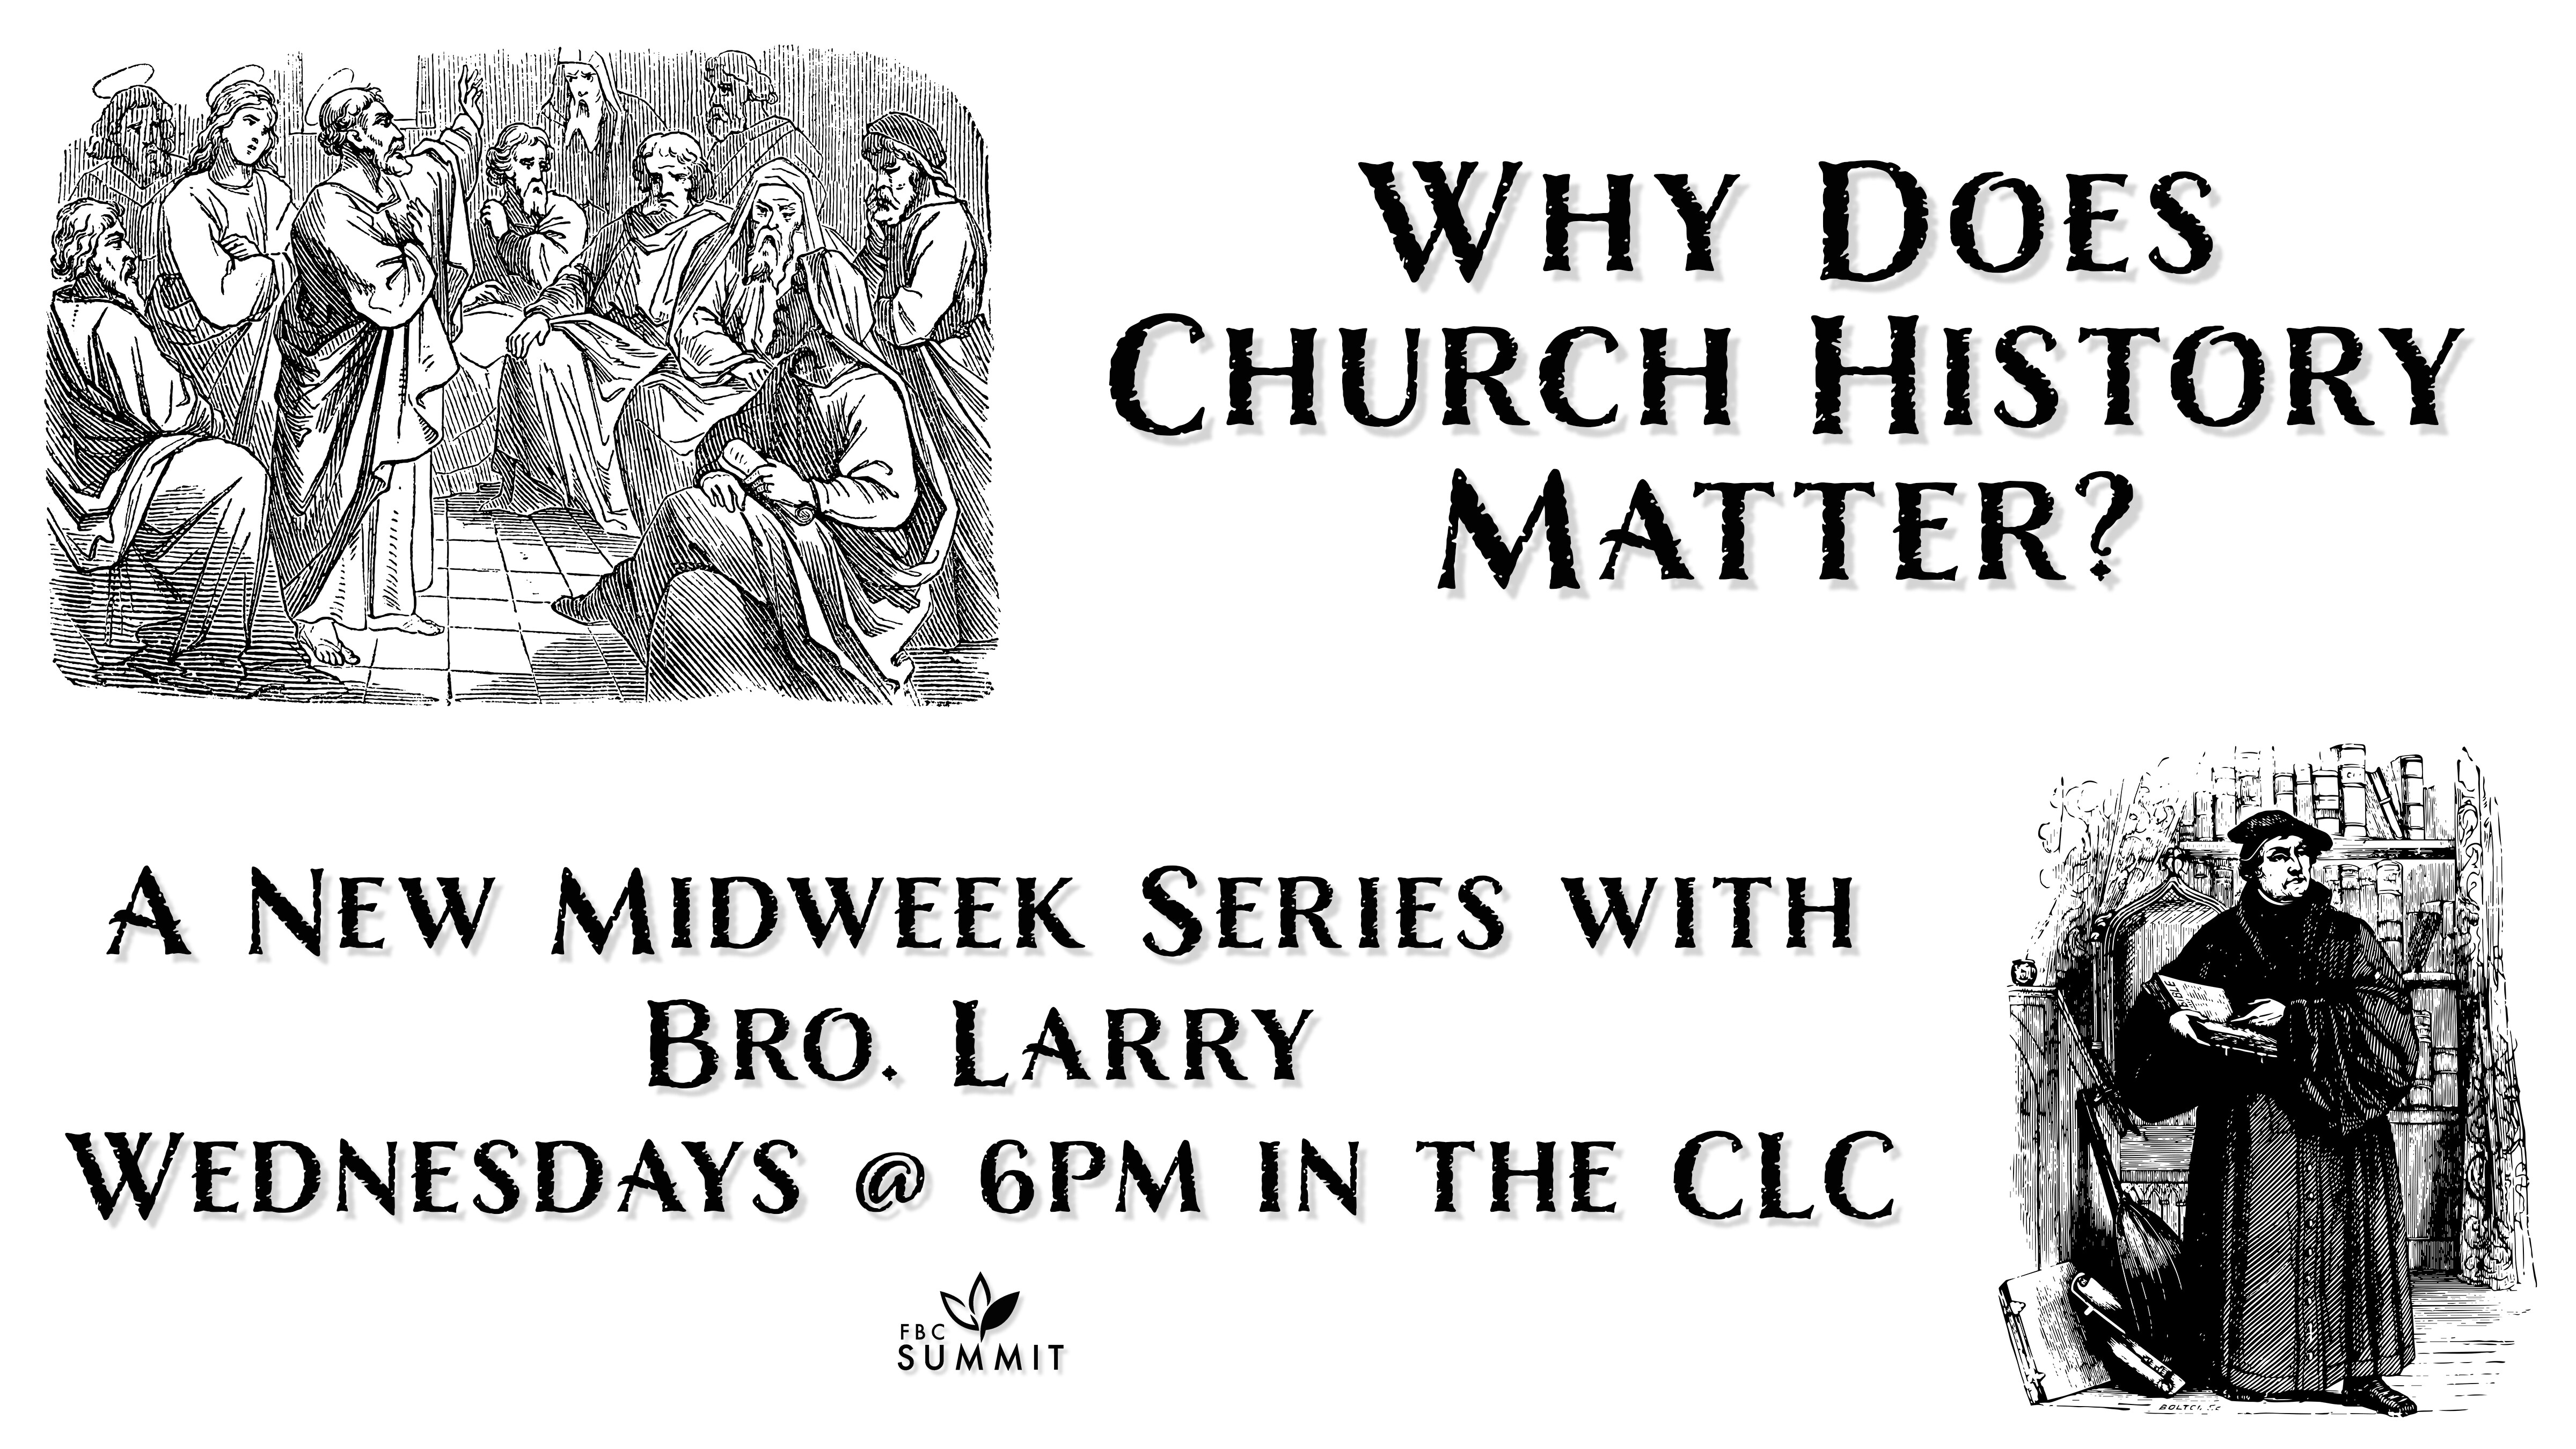 Midweek Bible Study: "Church History 101: The Third & Fourth Centuries" // Dr. Larry LeBlanc